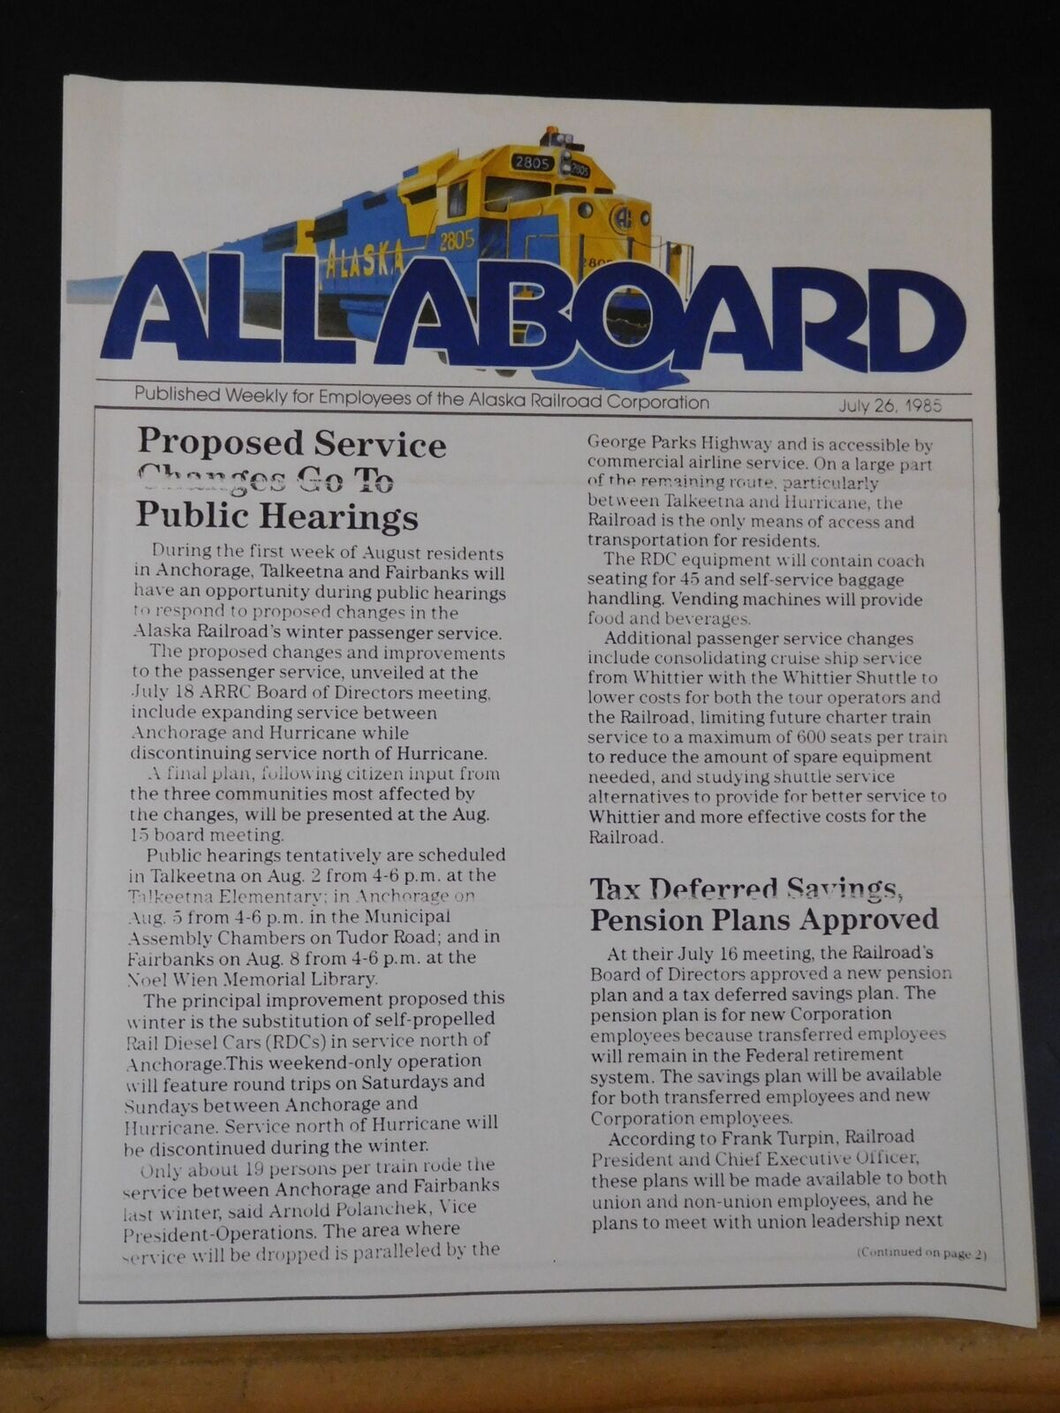 All Aboard 1985 July 26 Employees of Alaska Railroad Corporation Newsletter